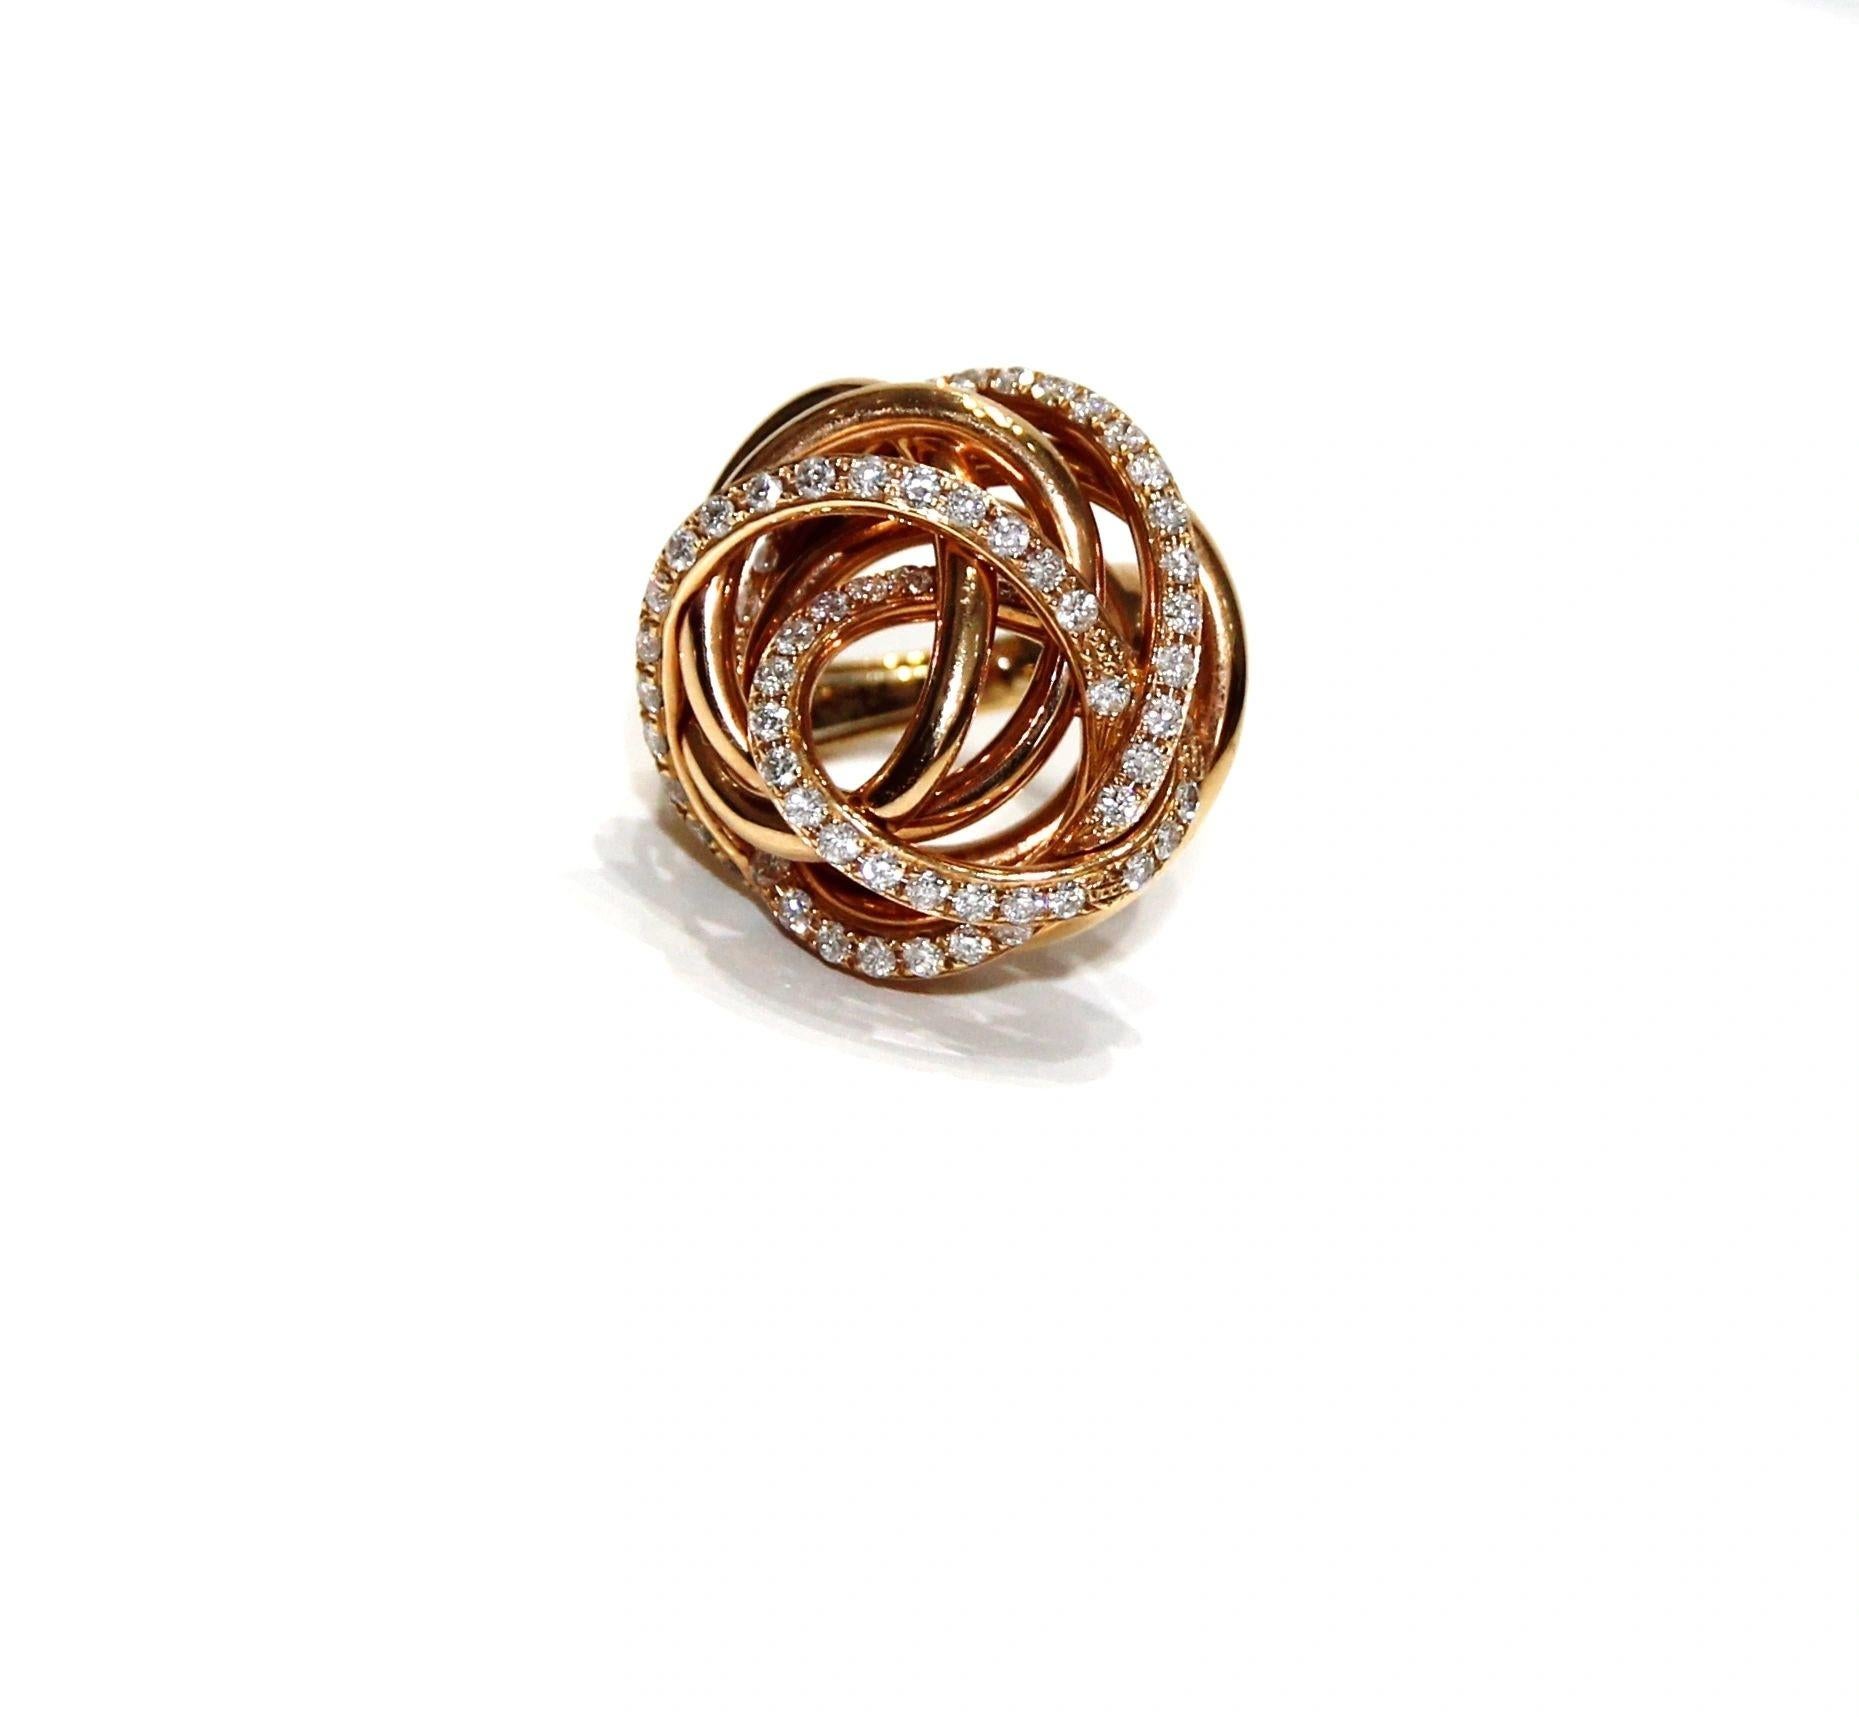 De Grisogono 18K Rose Gold Diamond Flower Ring
Diamonds: 1.80cts
Color: G-H Clarity: VS1/VS2
Ring Size: 5.5
Retail price: $17,200.00
SKU: DGR01034
